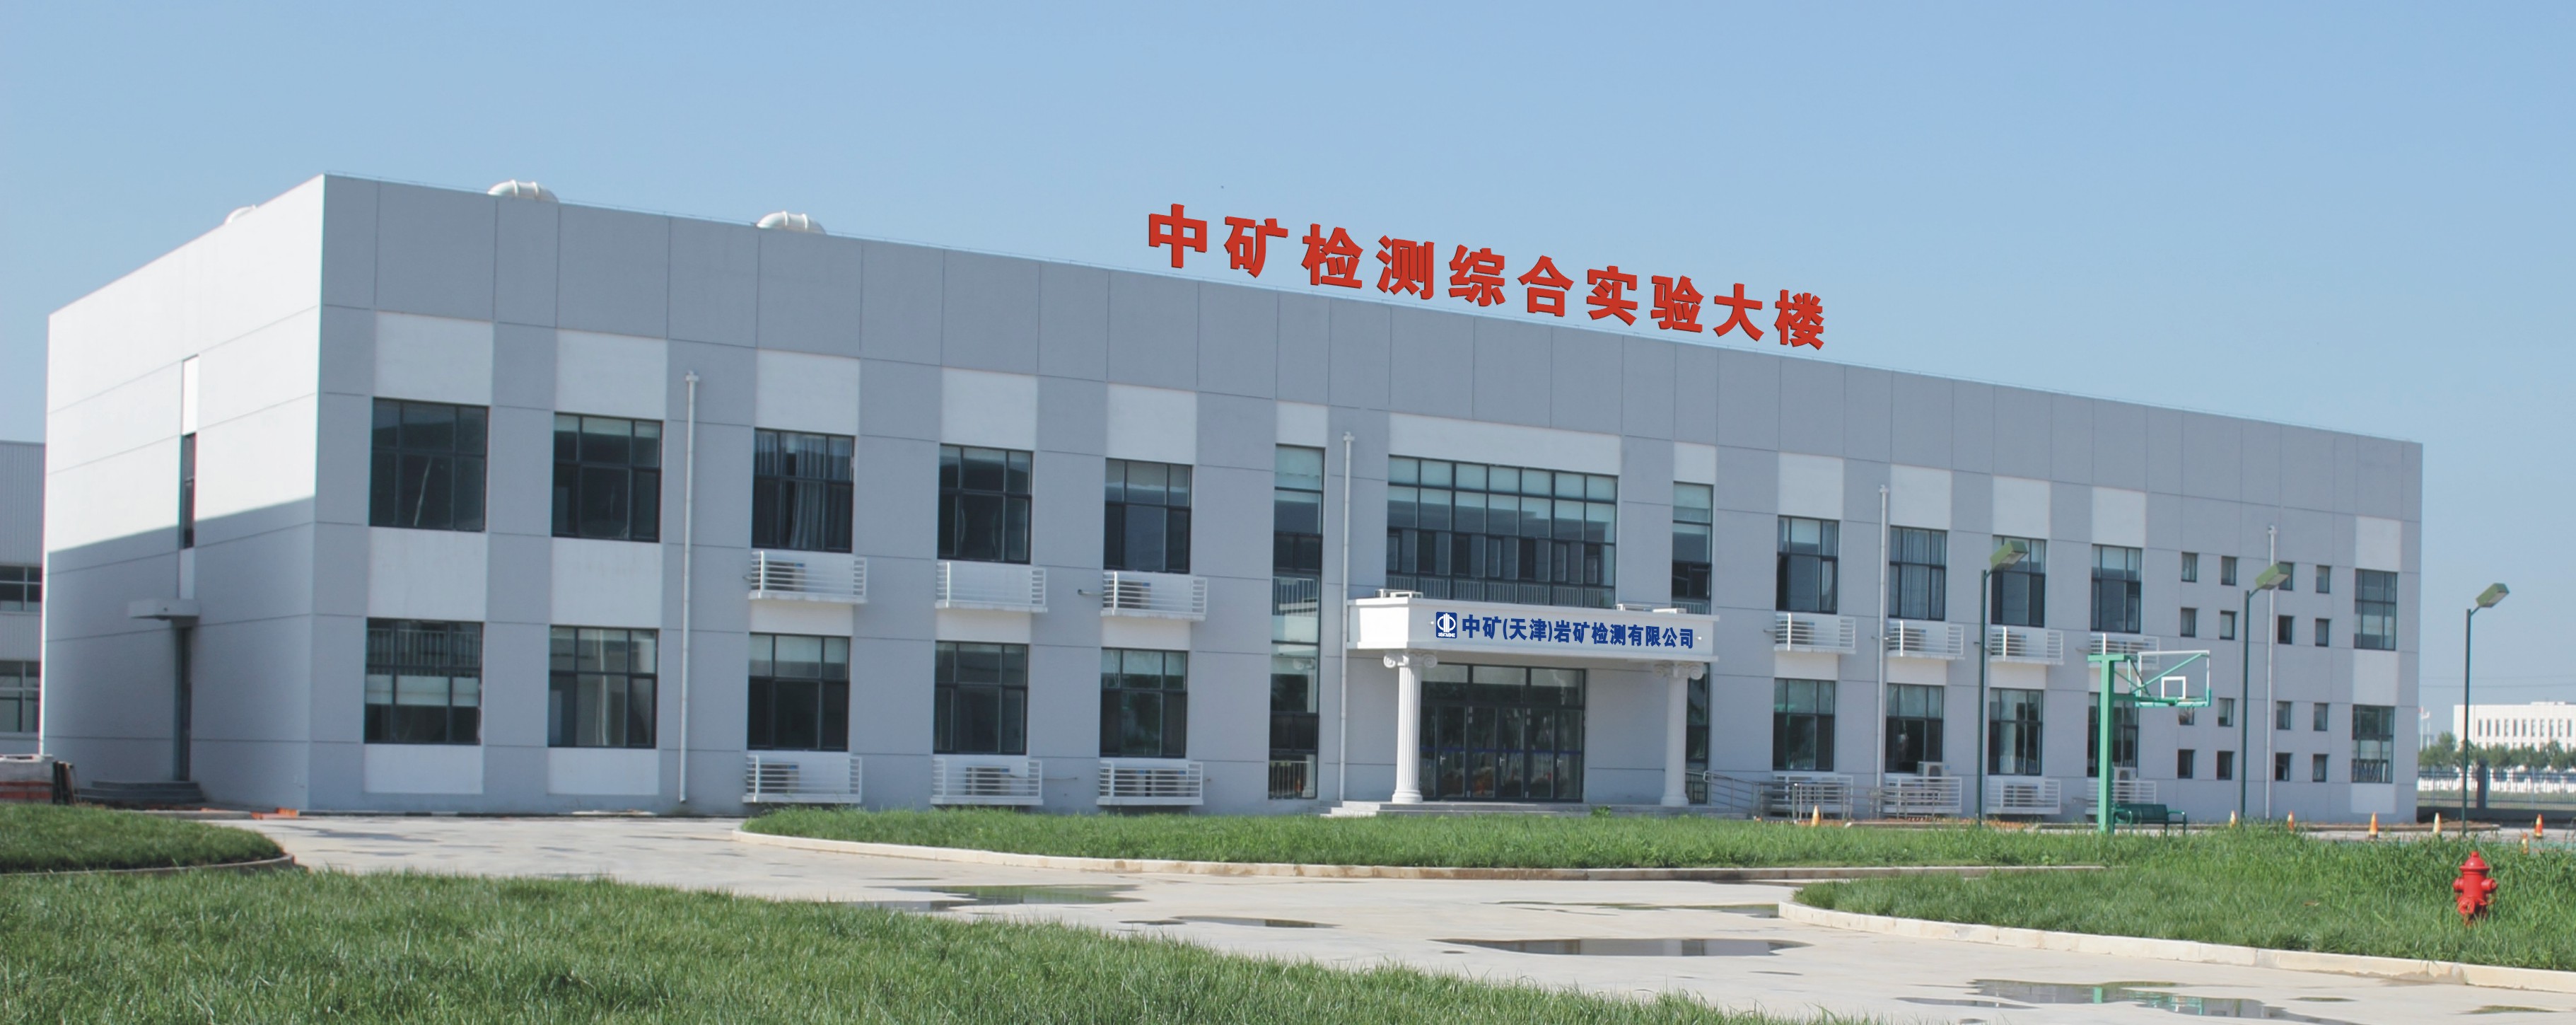 Sinomine Rock & Mineral Analysis (Tianjin) Co, Ltd.